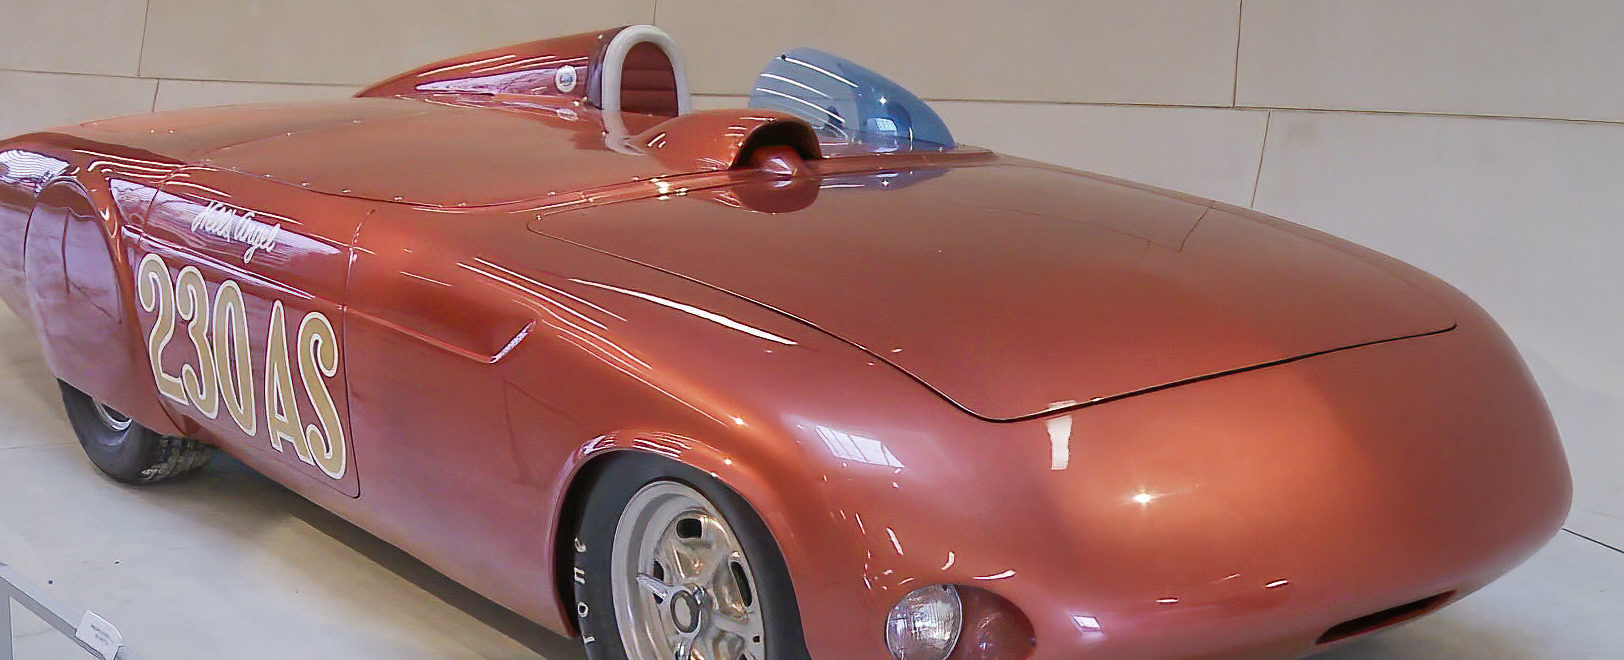 1956 Thunderbird built in a New Orleans garage